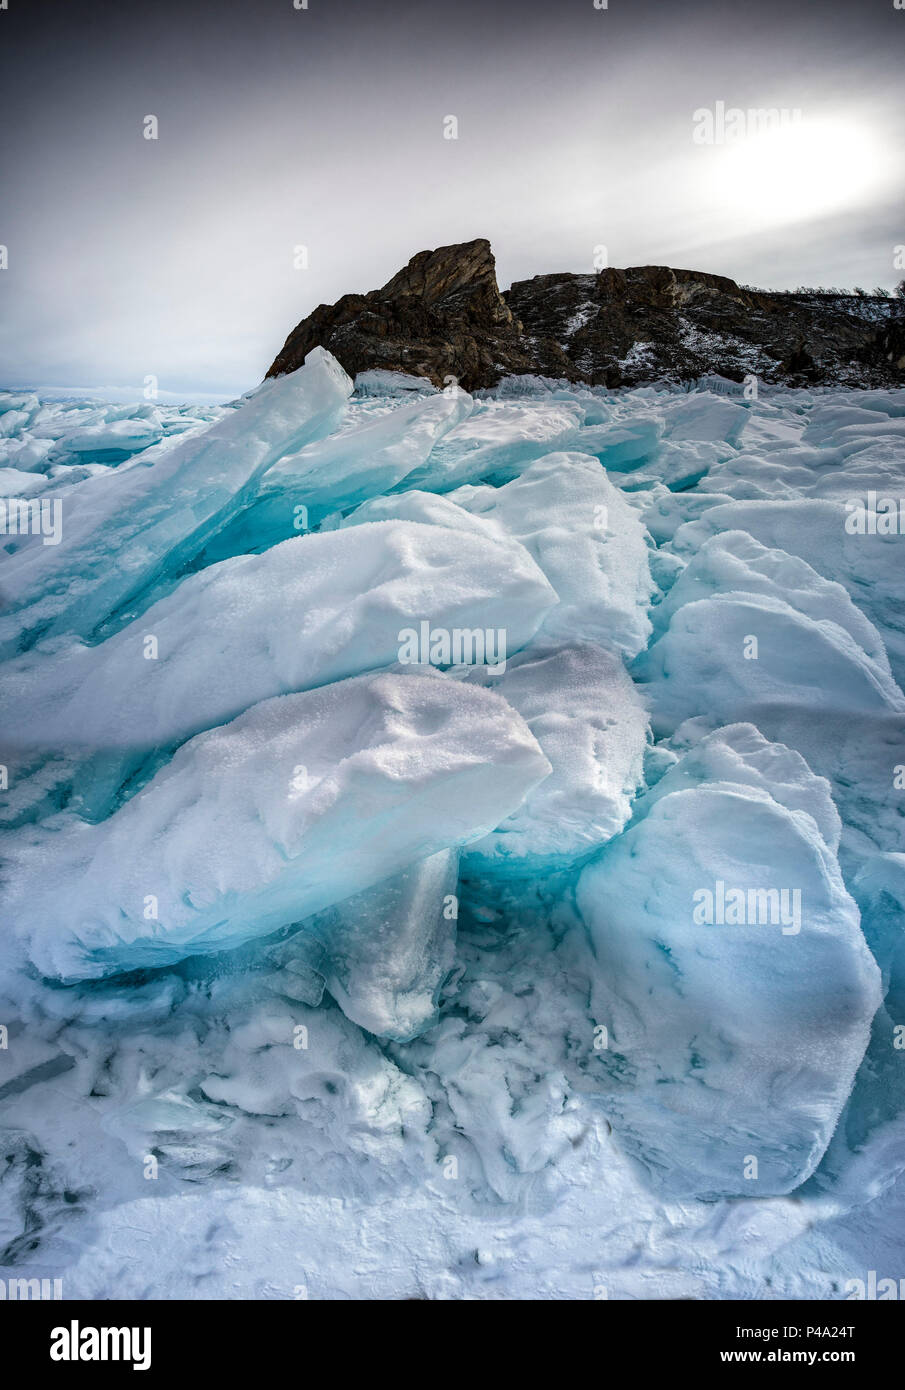 Los bloques de hielo sobre el lago Baikal, región de Irkutsk, Siberia, Rusia Foto de stock